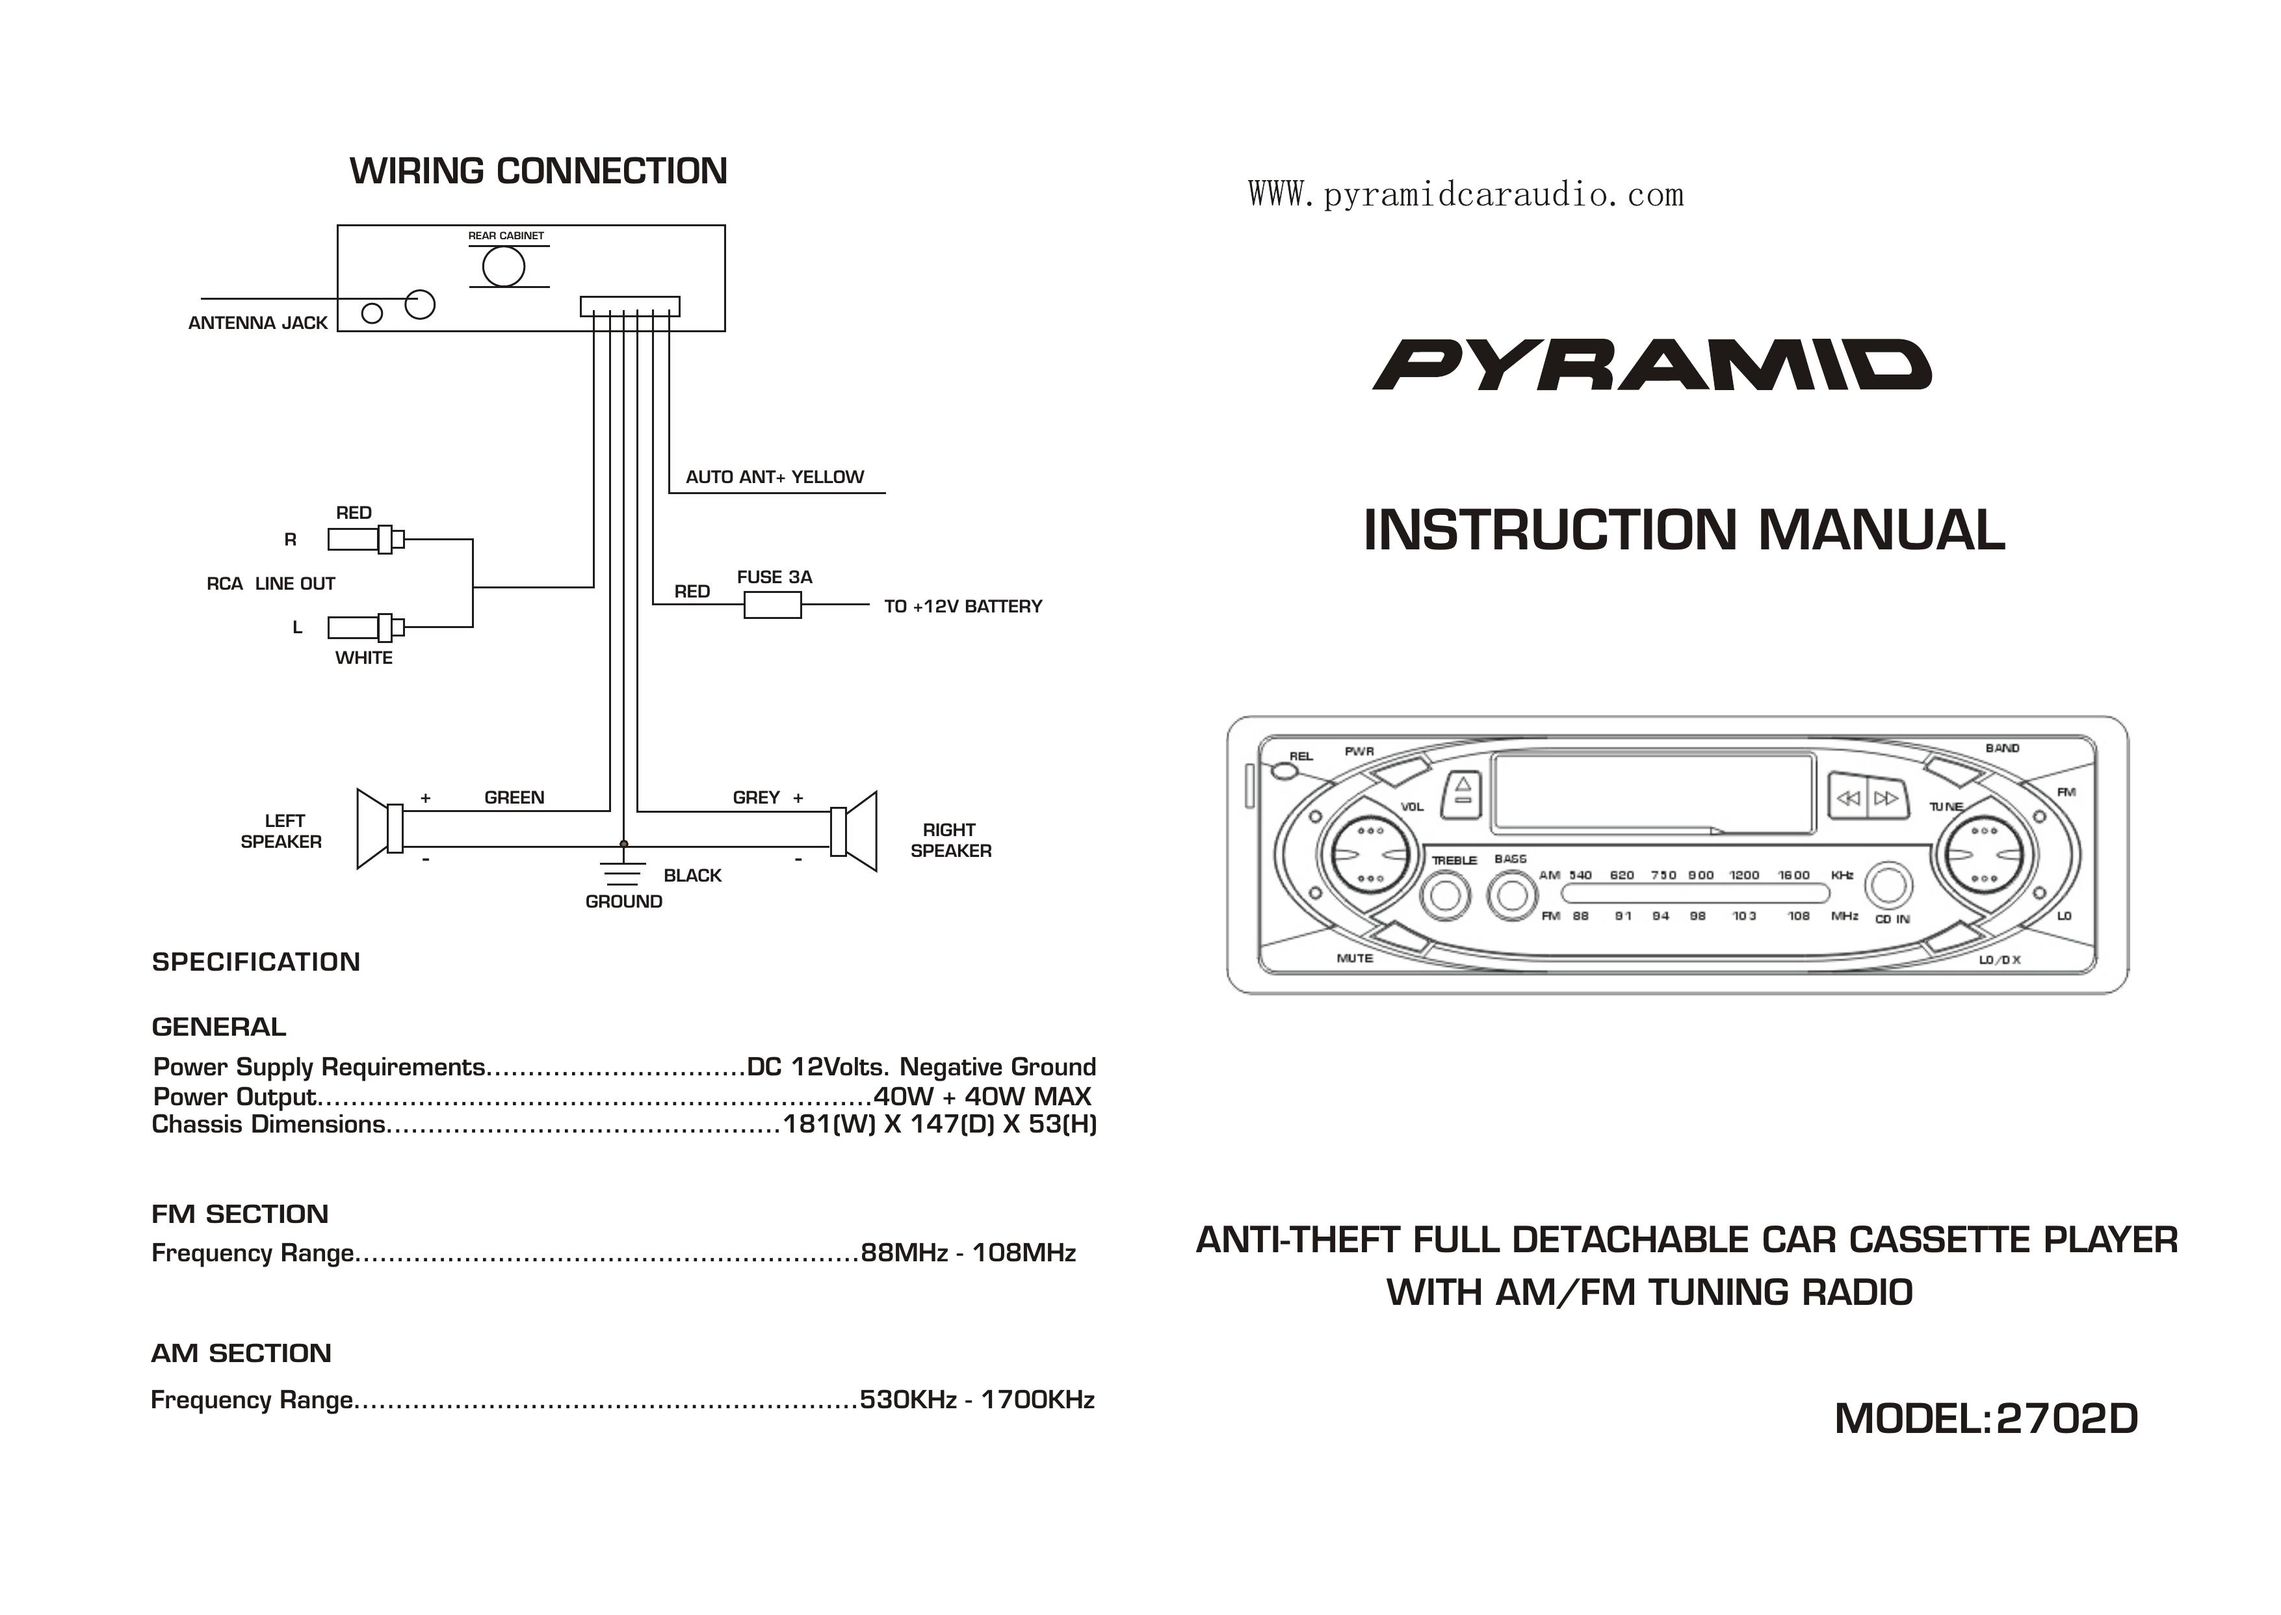 Pyramid Car Audio 2702D Car Stereo System User Manual